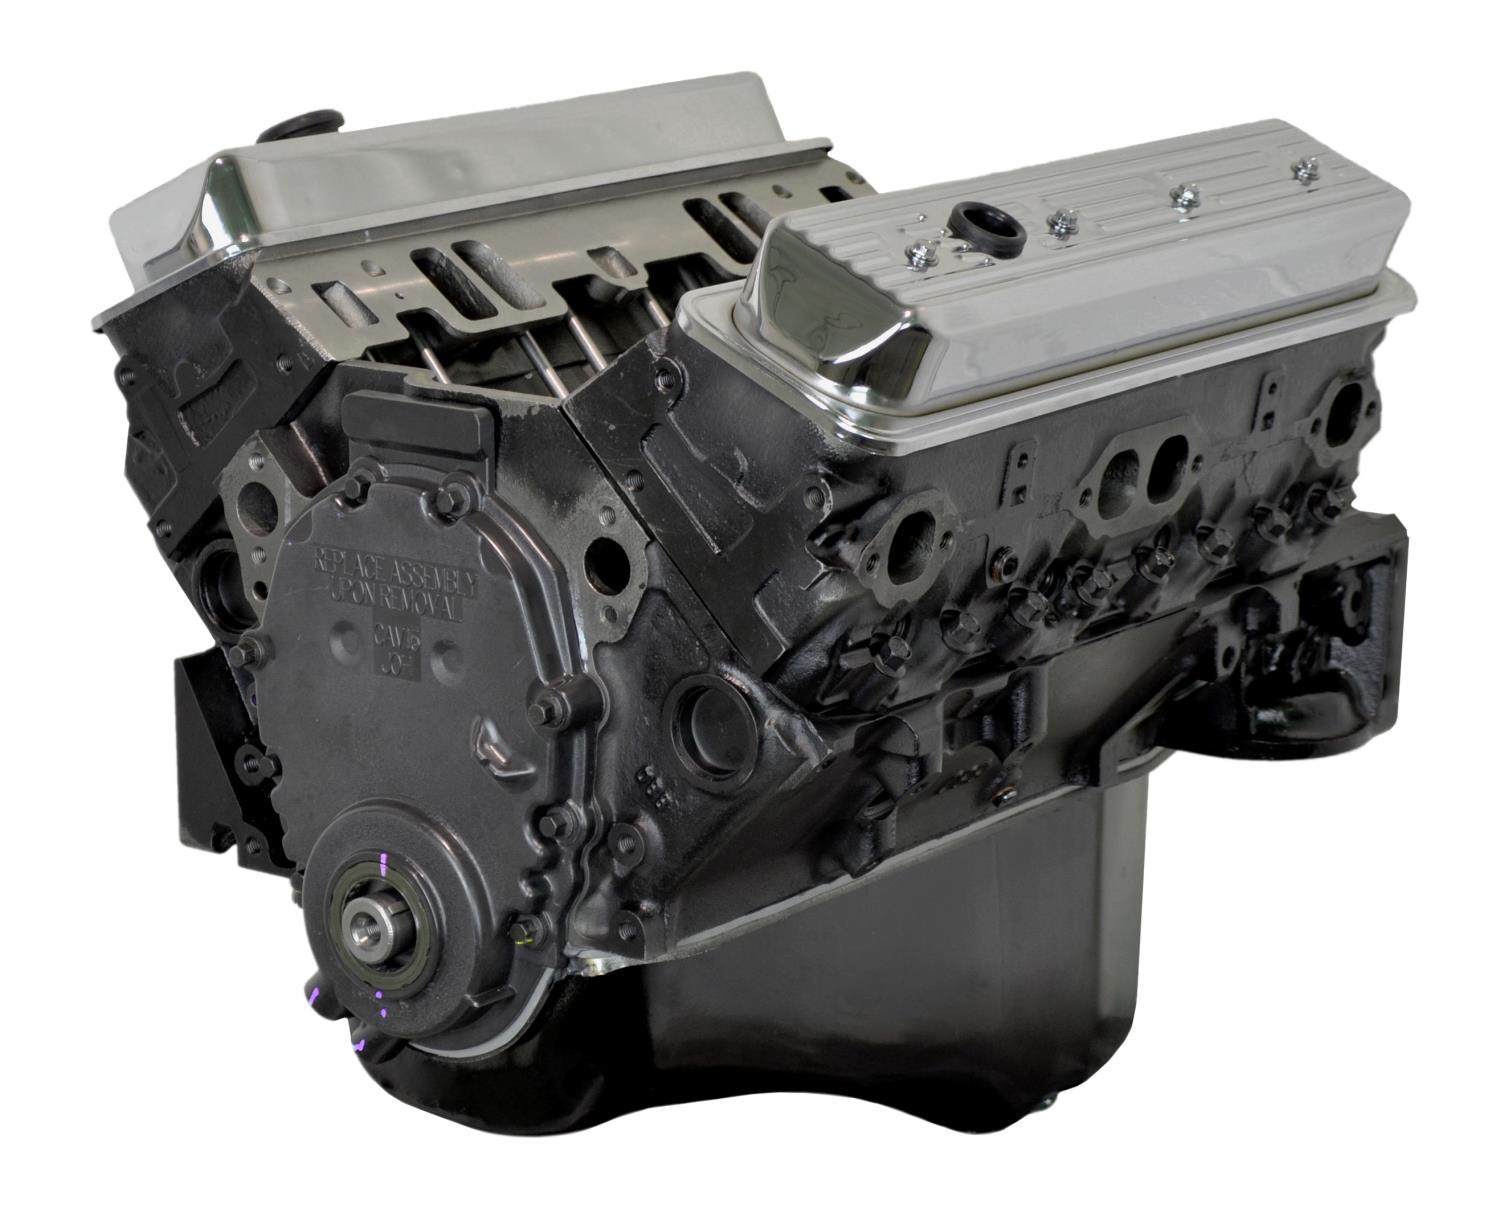 HP74 High Performance Crate Engine Small Block Chevy Vortec 350ci / 315HP / 400TQ